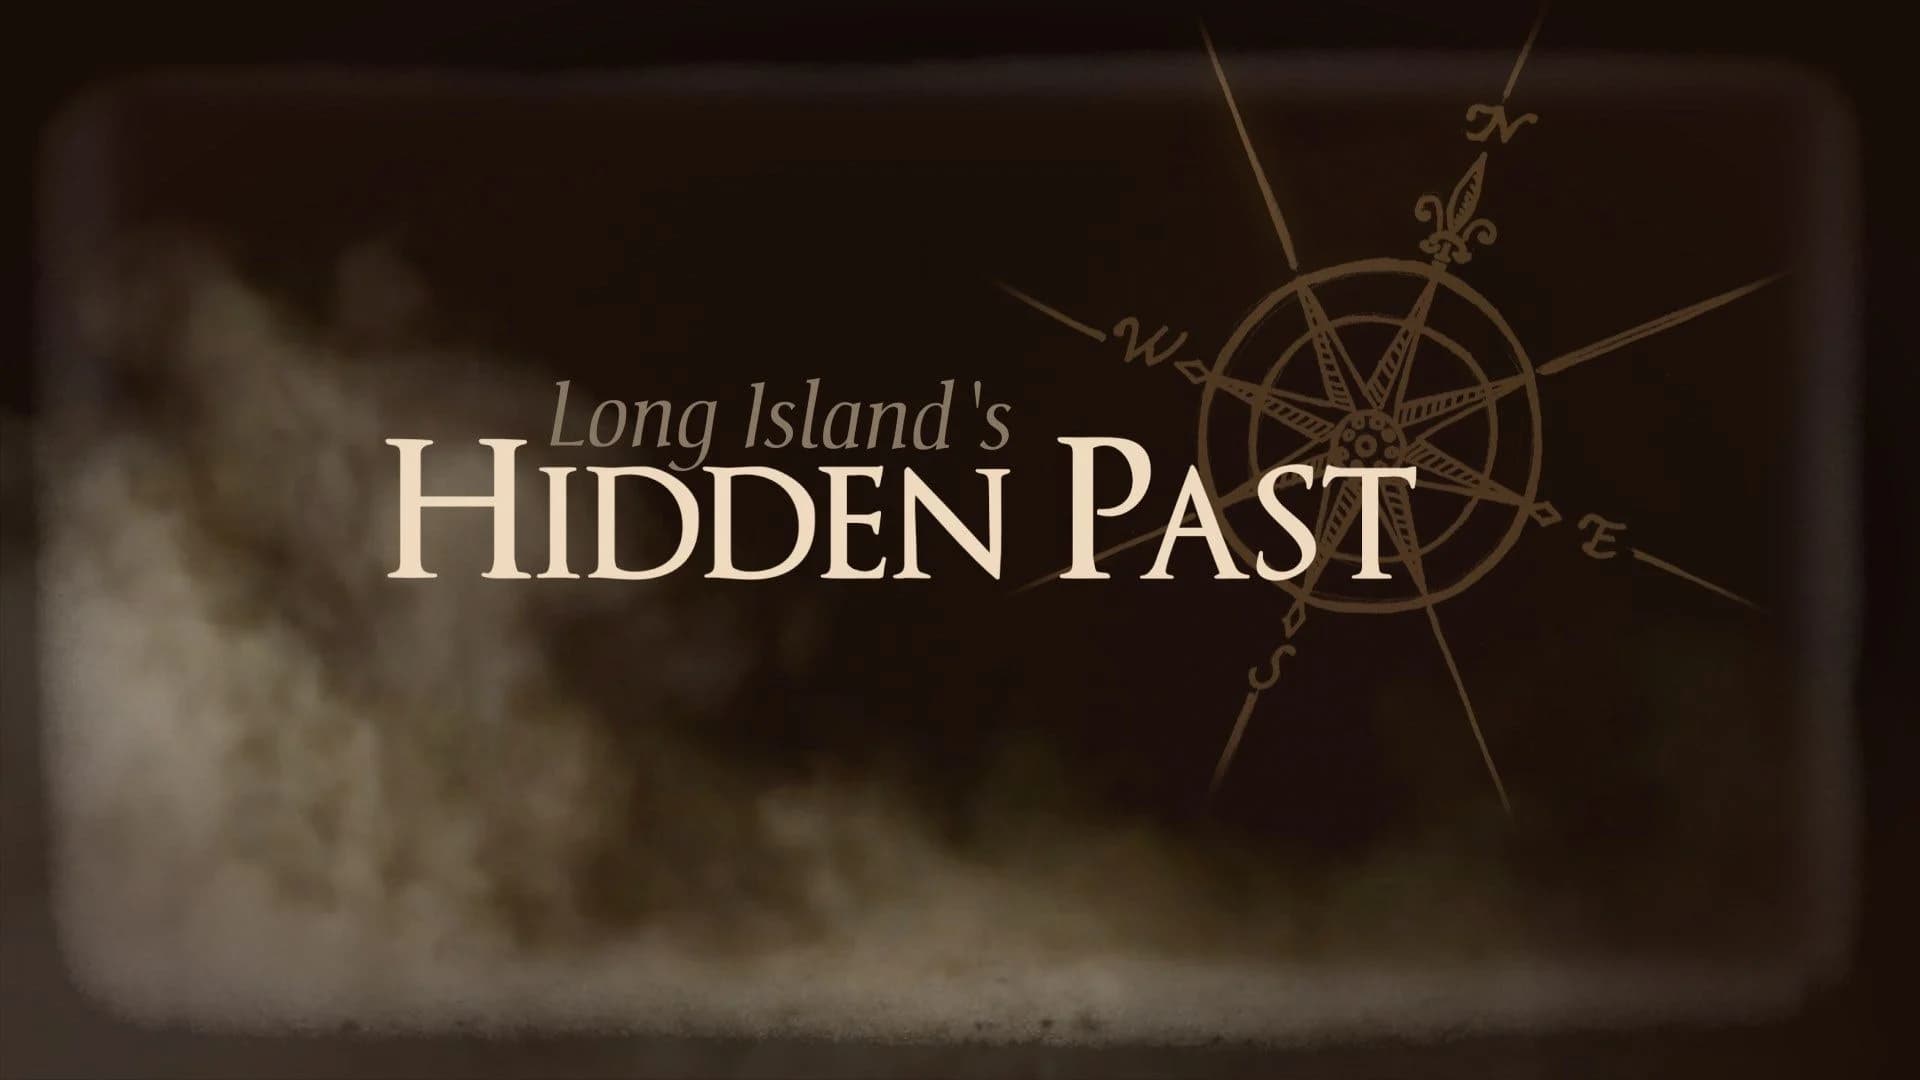 2017 Long Island's Hidden Past: More Information